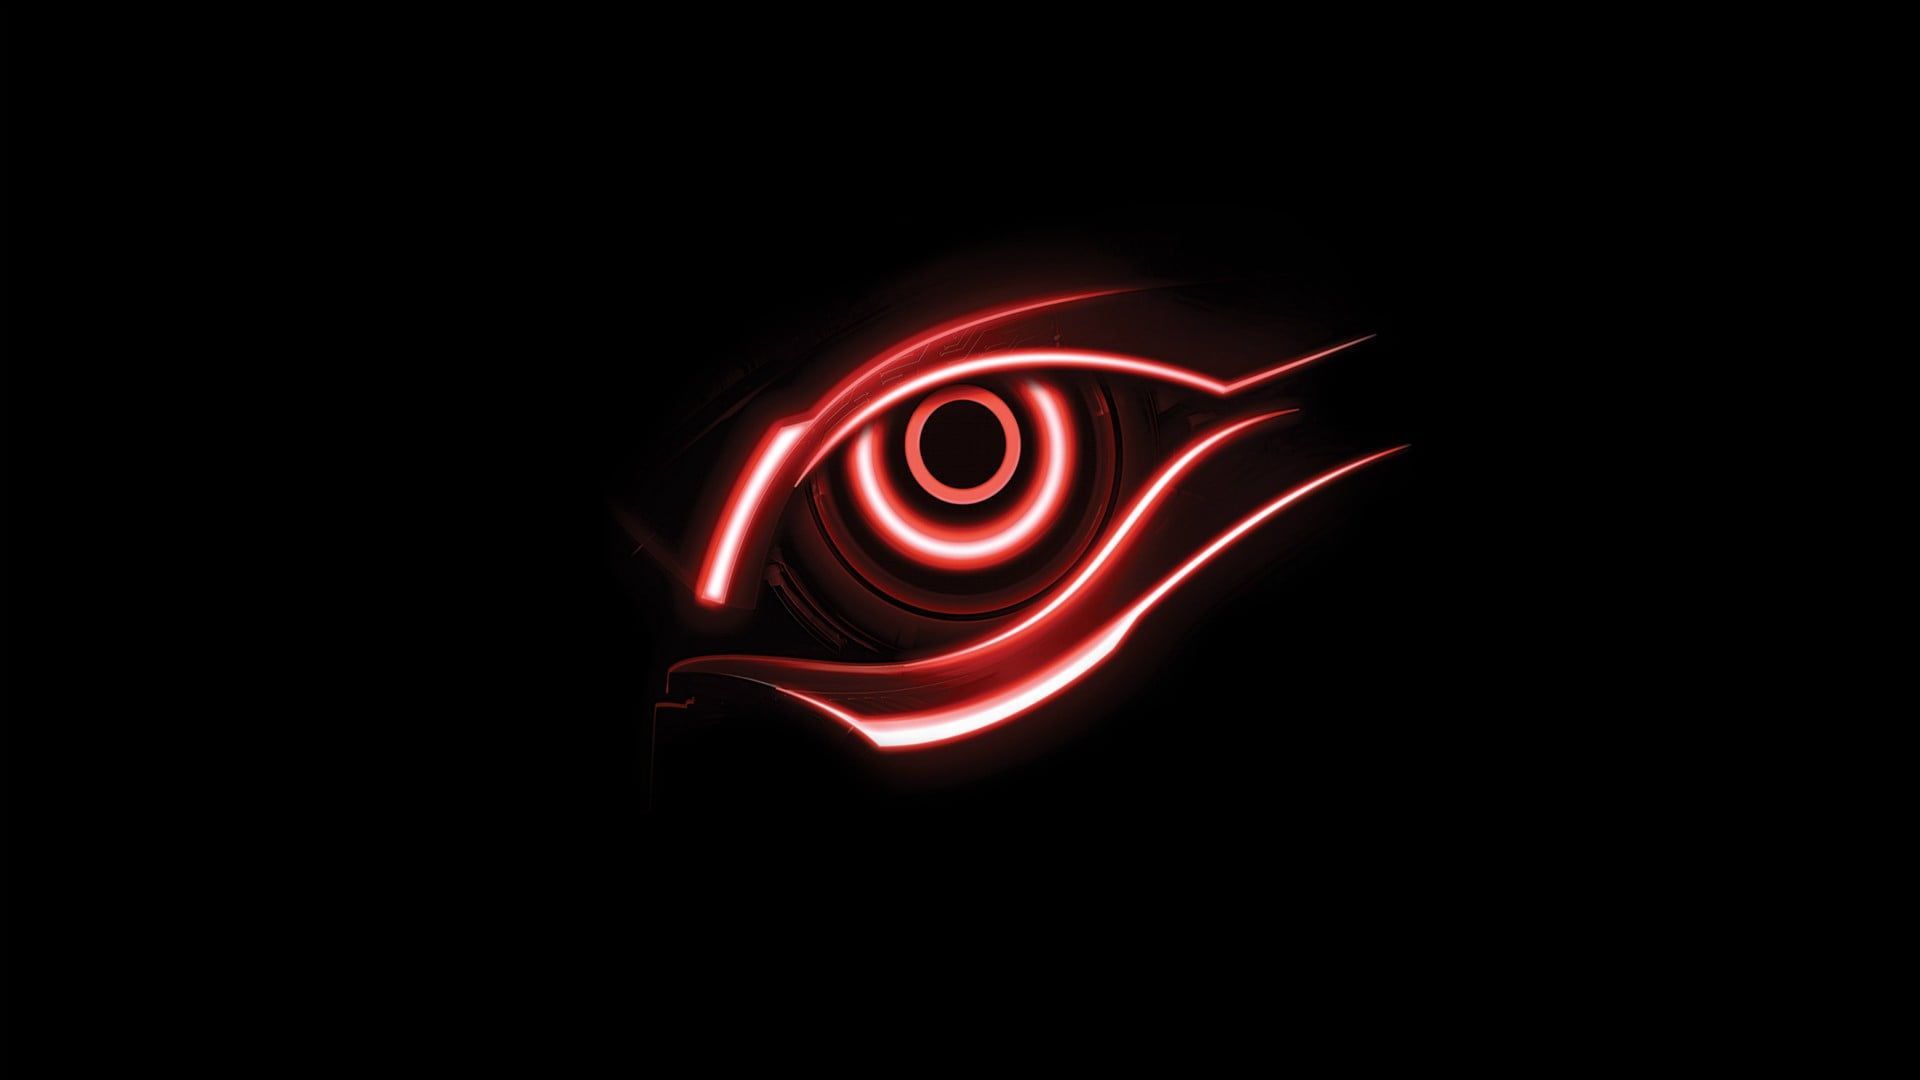 Red halo headlight wallpaper, eye illustration, eyes, black background. Eye illustration, Eyes wallpaper, Red and black wallpaper